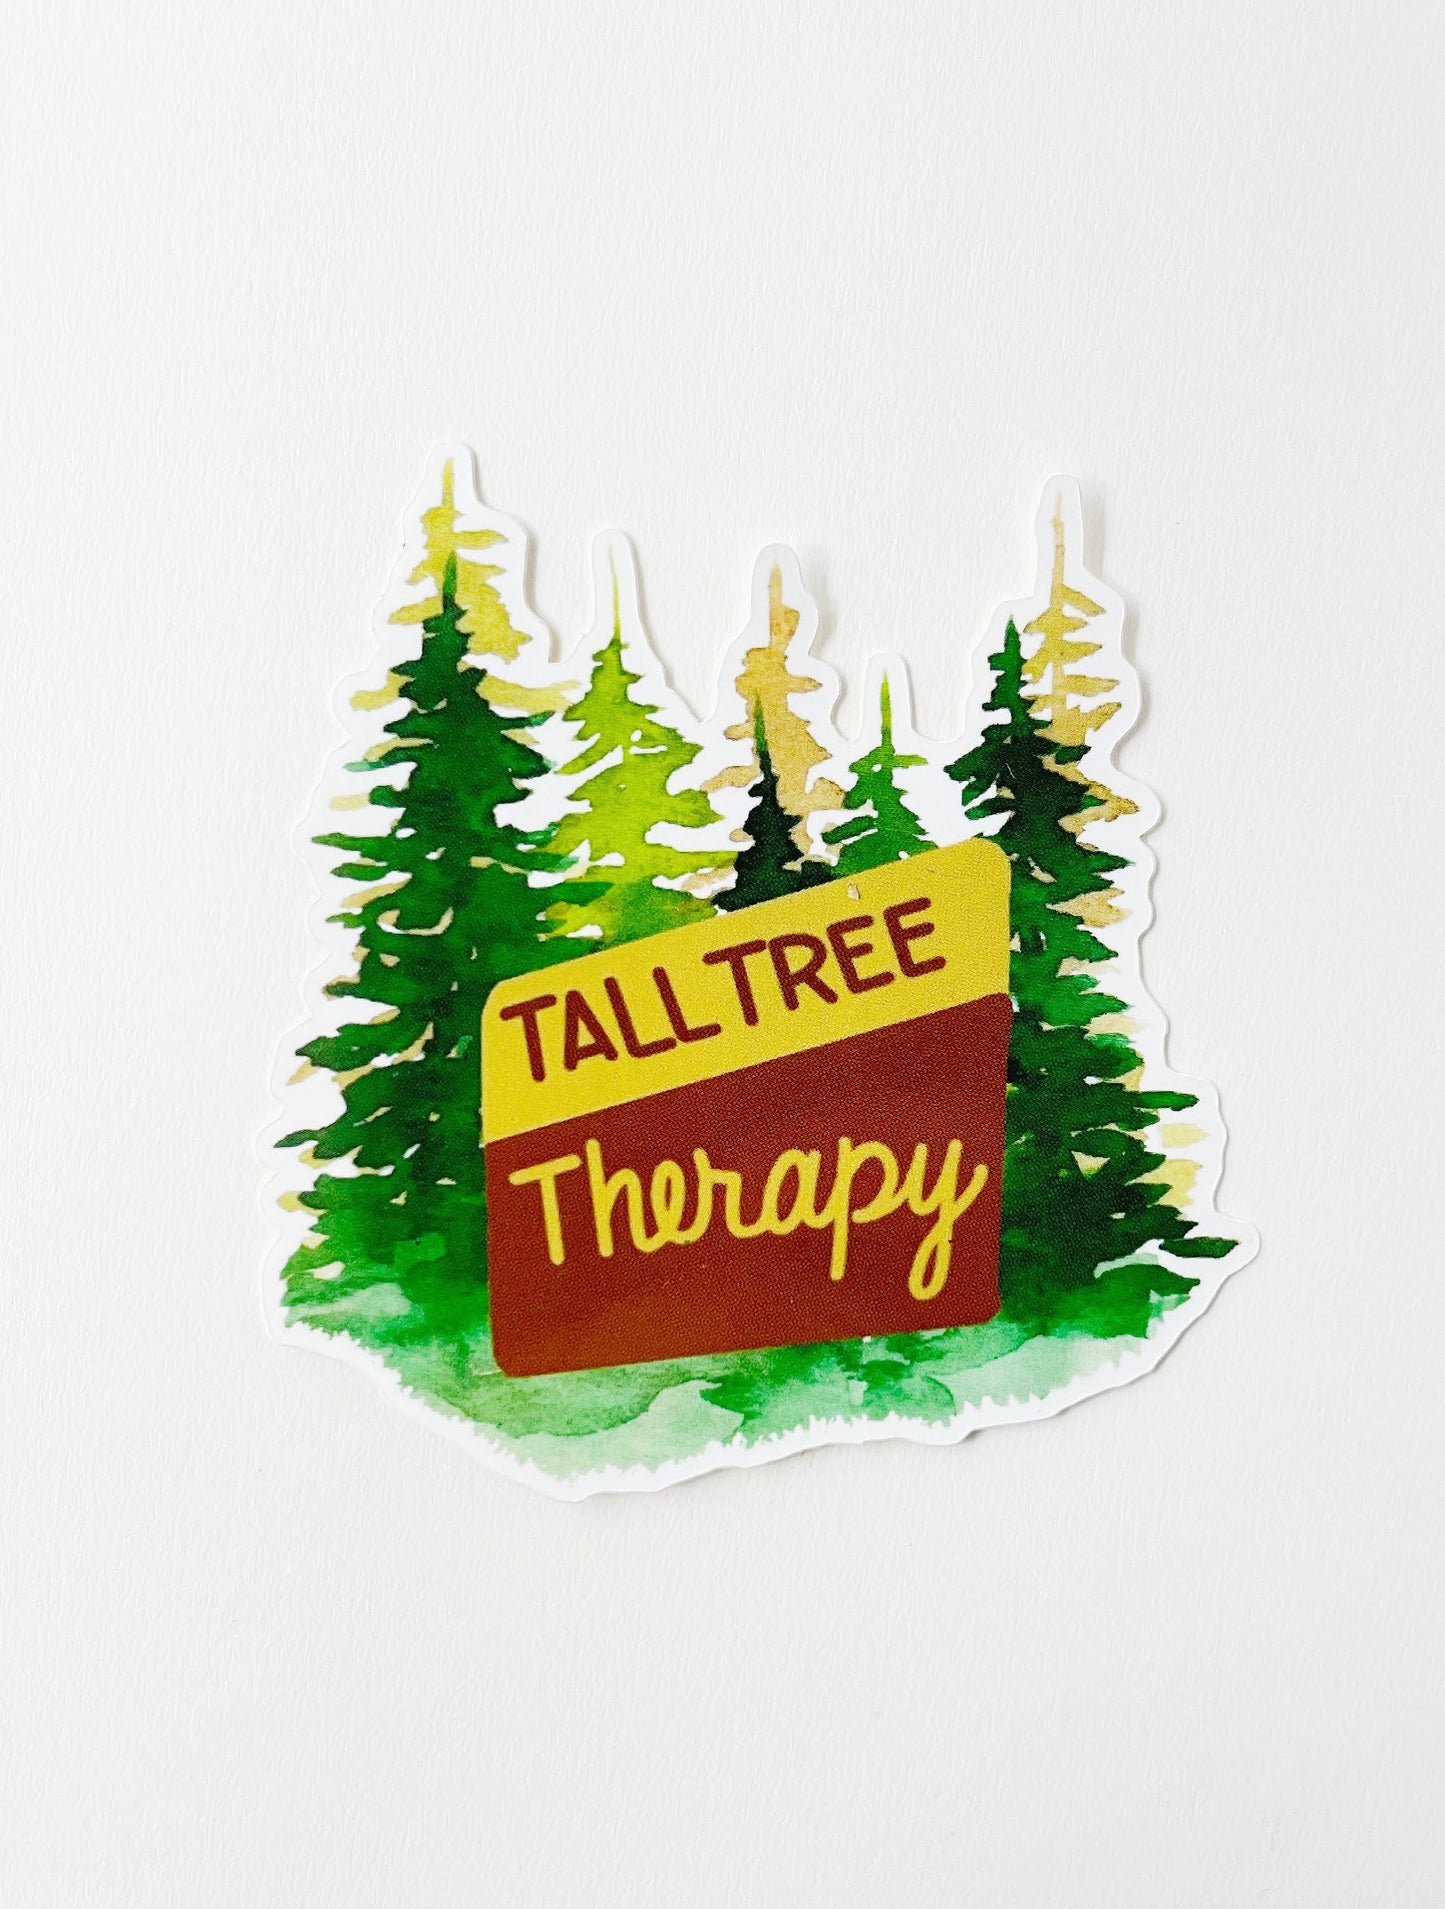 Tall Tree Therapy vinyl sticker